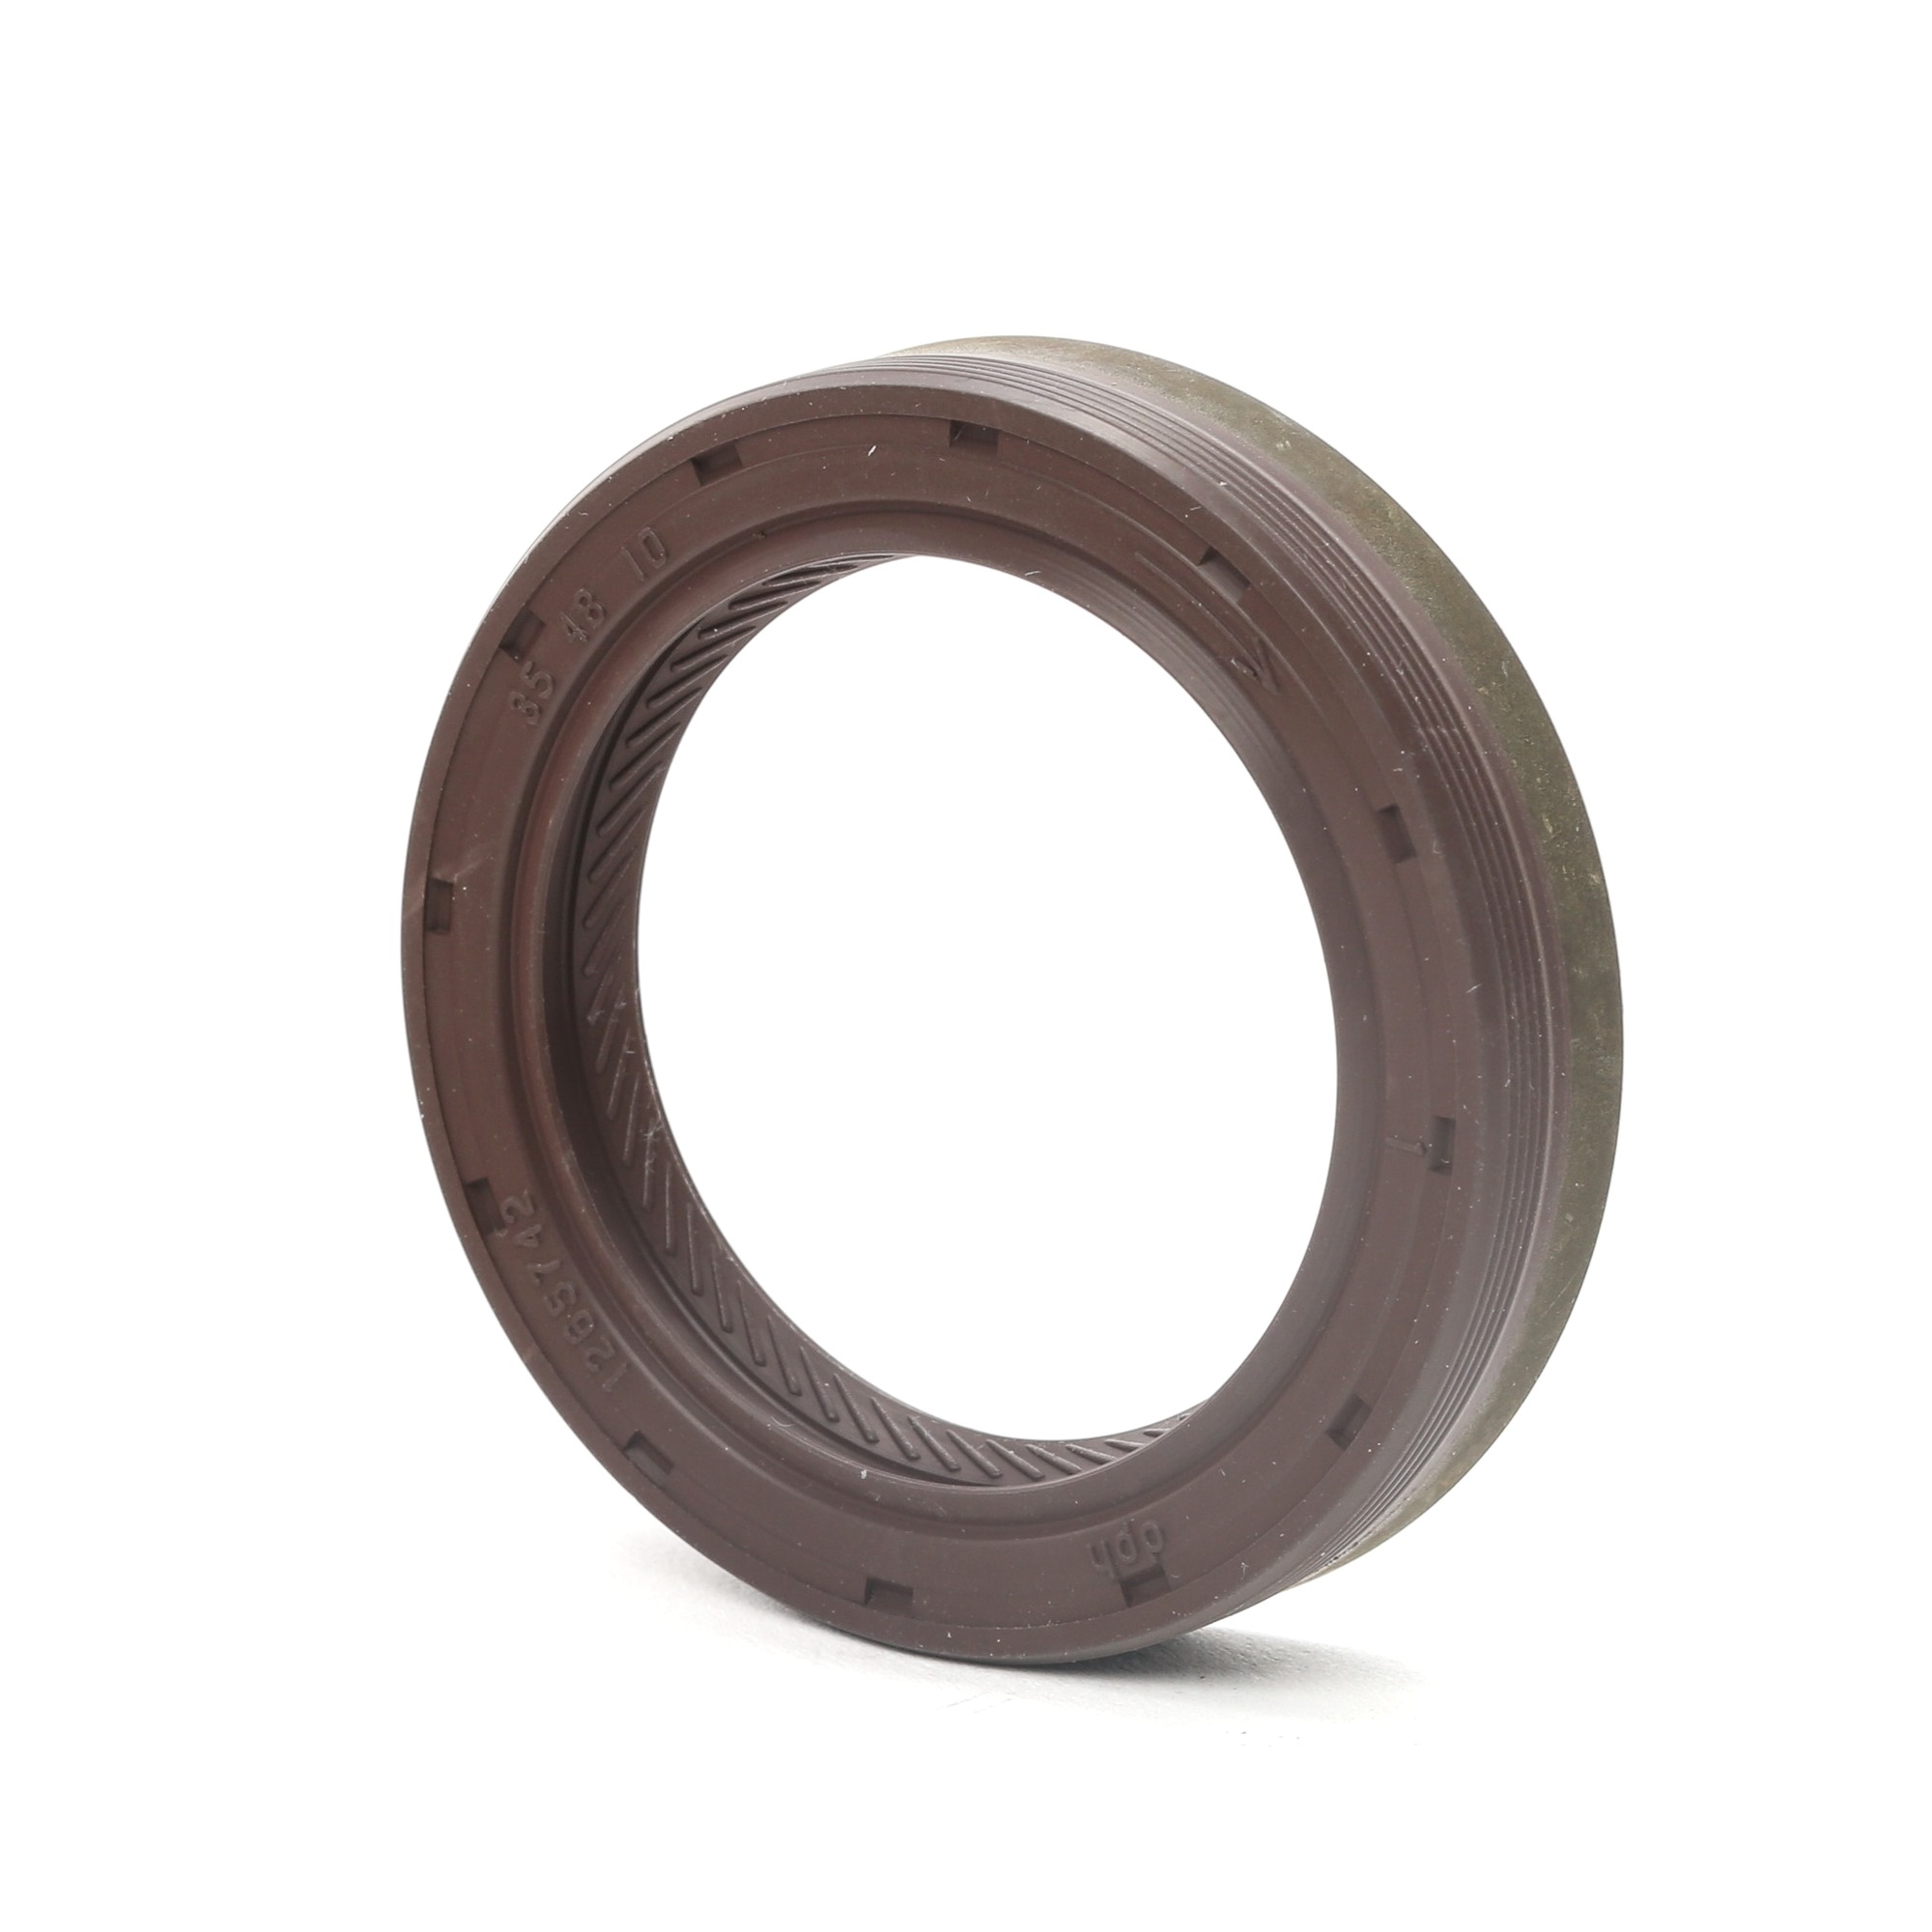 VAICO V10-3263 Crankshaft seal Q+, original equipment manufacturer quality, frontal sided, FPM (fluoride rubber)